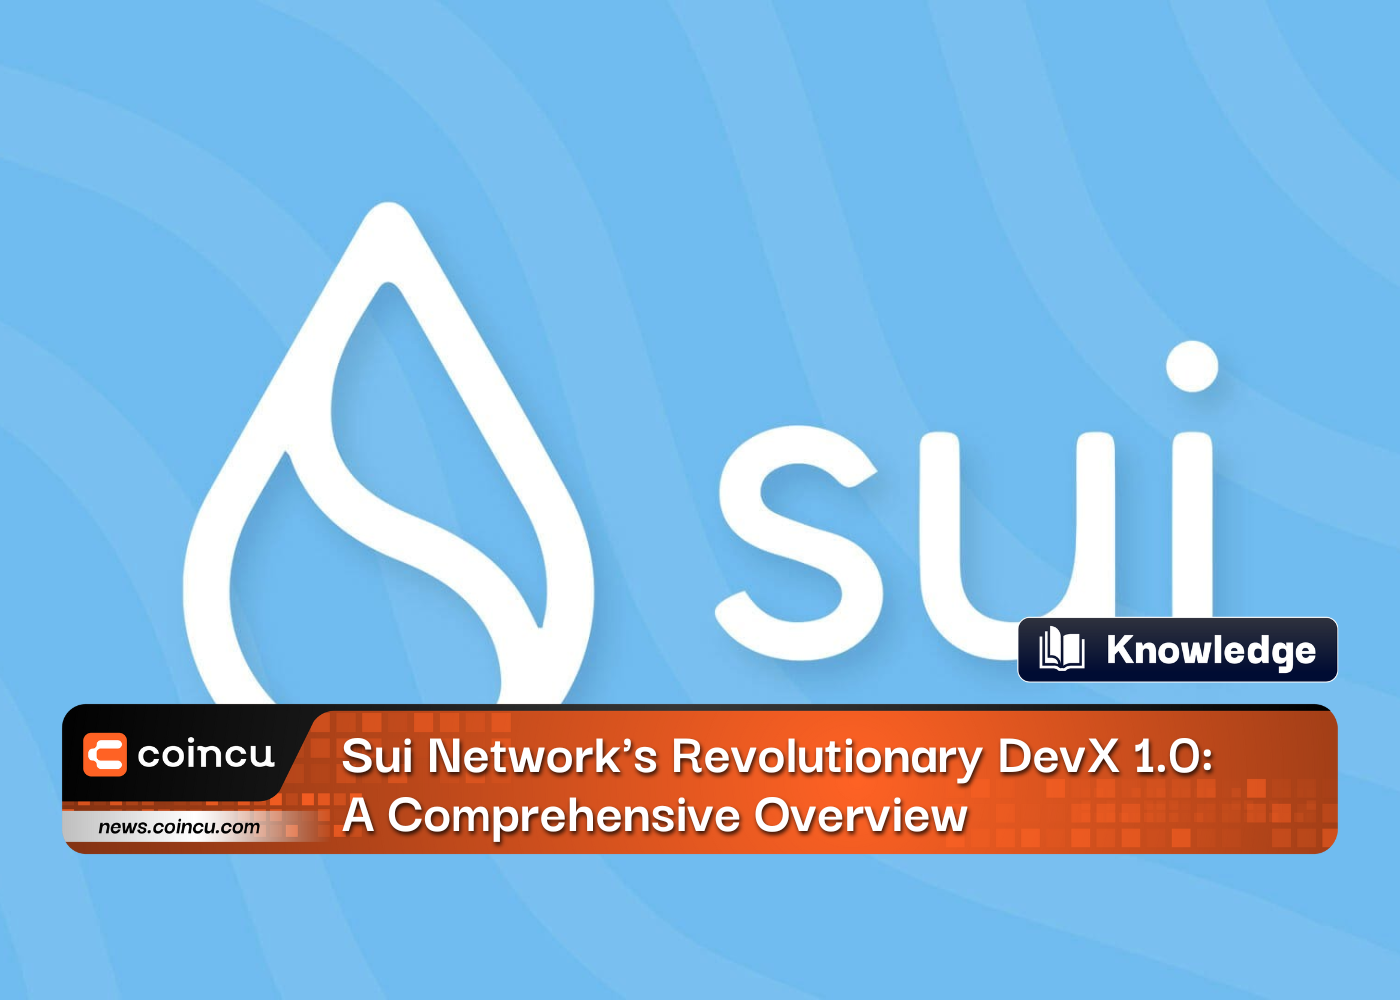 Sui Network's Revolutionary DevX 1.0: A Comprehensive Overview